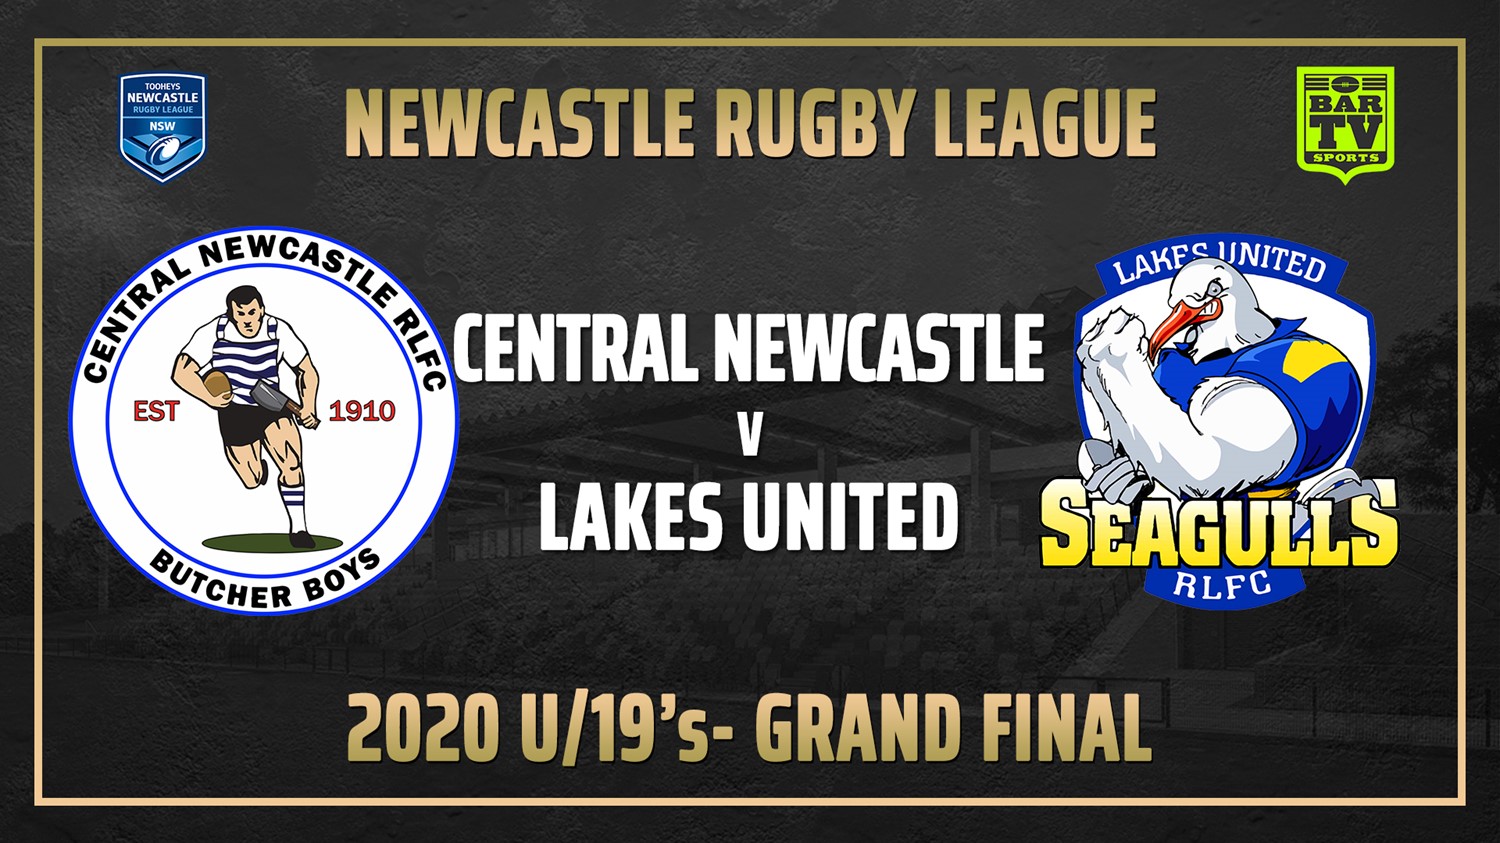 Newcastle Rugby League Grand Final - U19 - Central Newcastle v Lakes United Slate Image